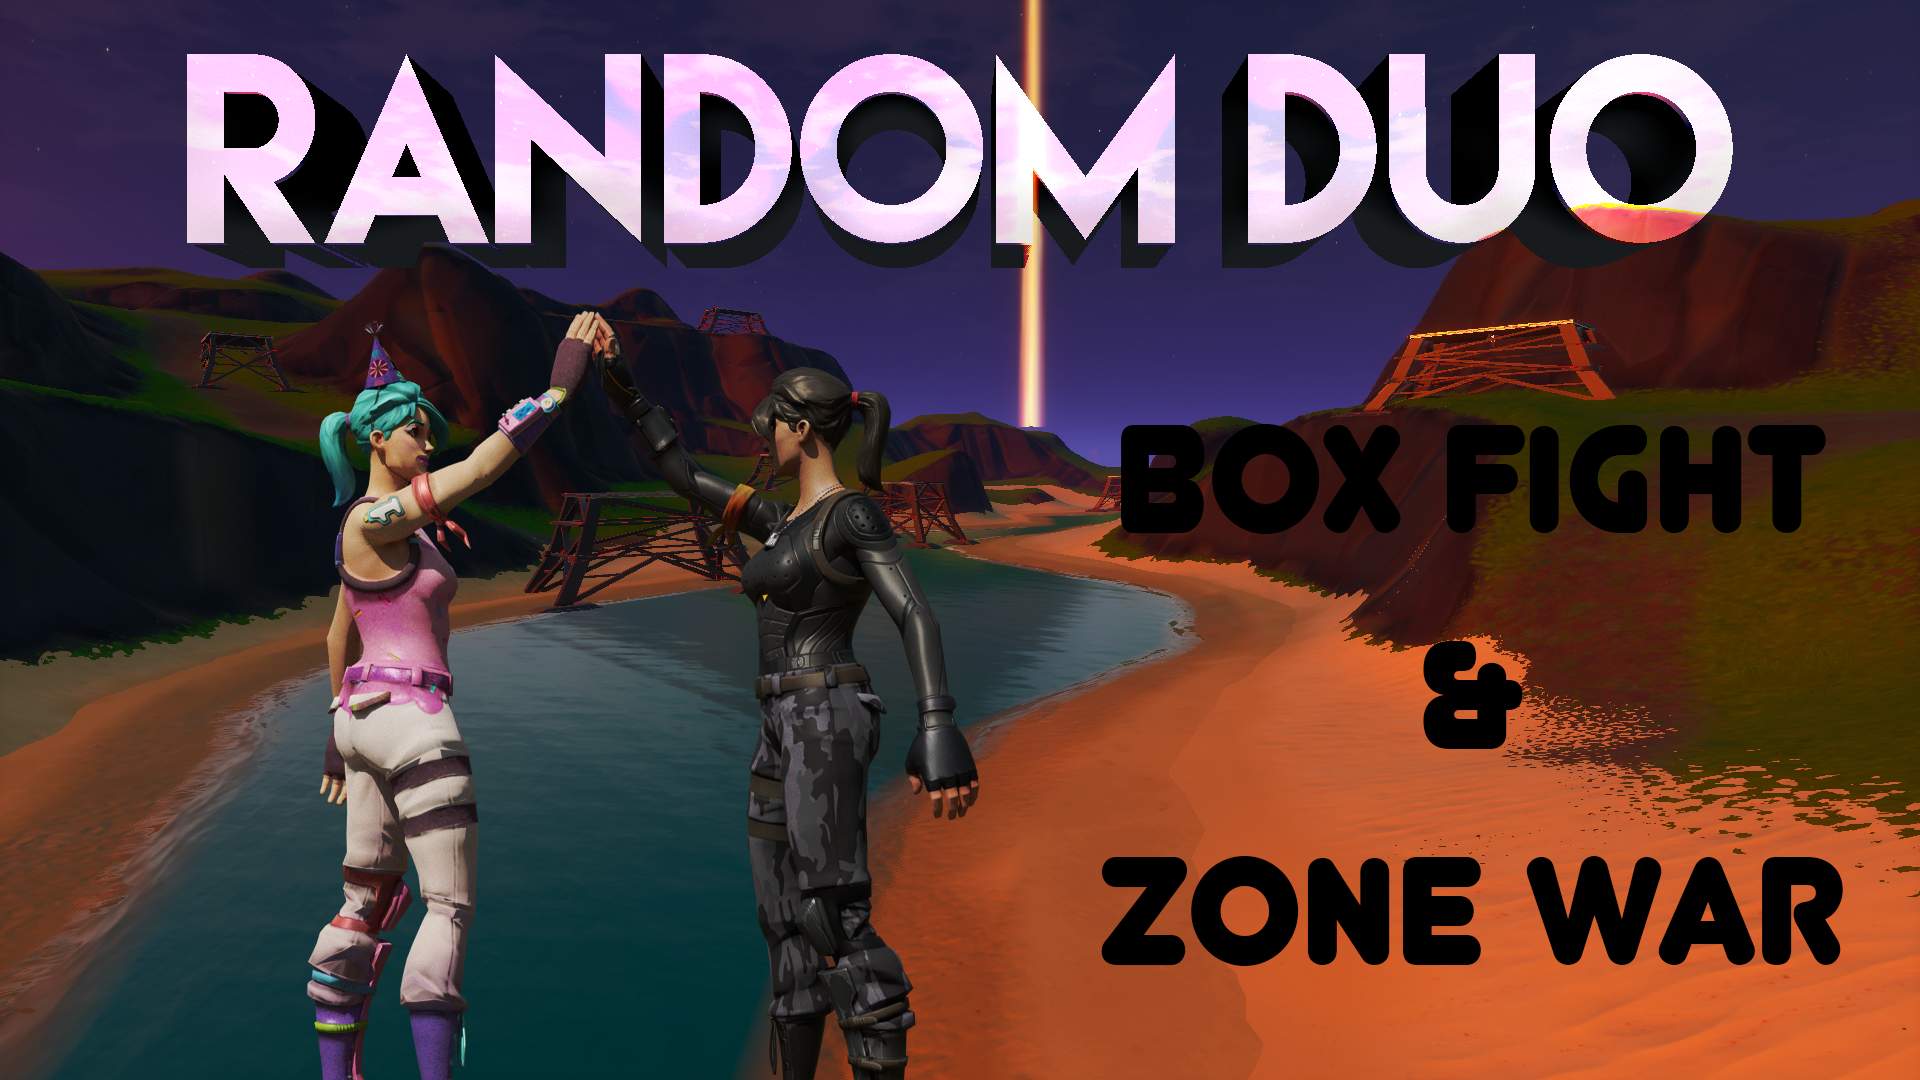 RANDOM DUO: BOX FIGHT & ZONE WAR